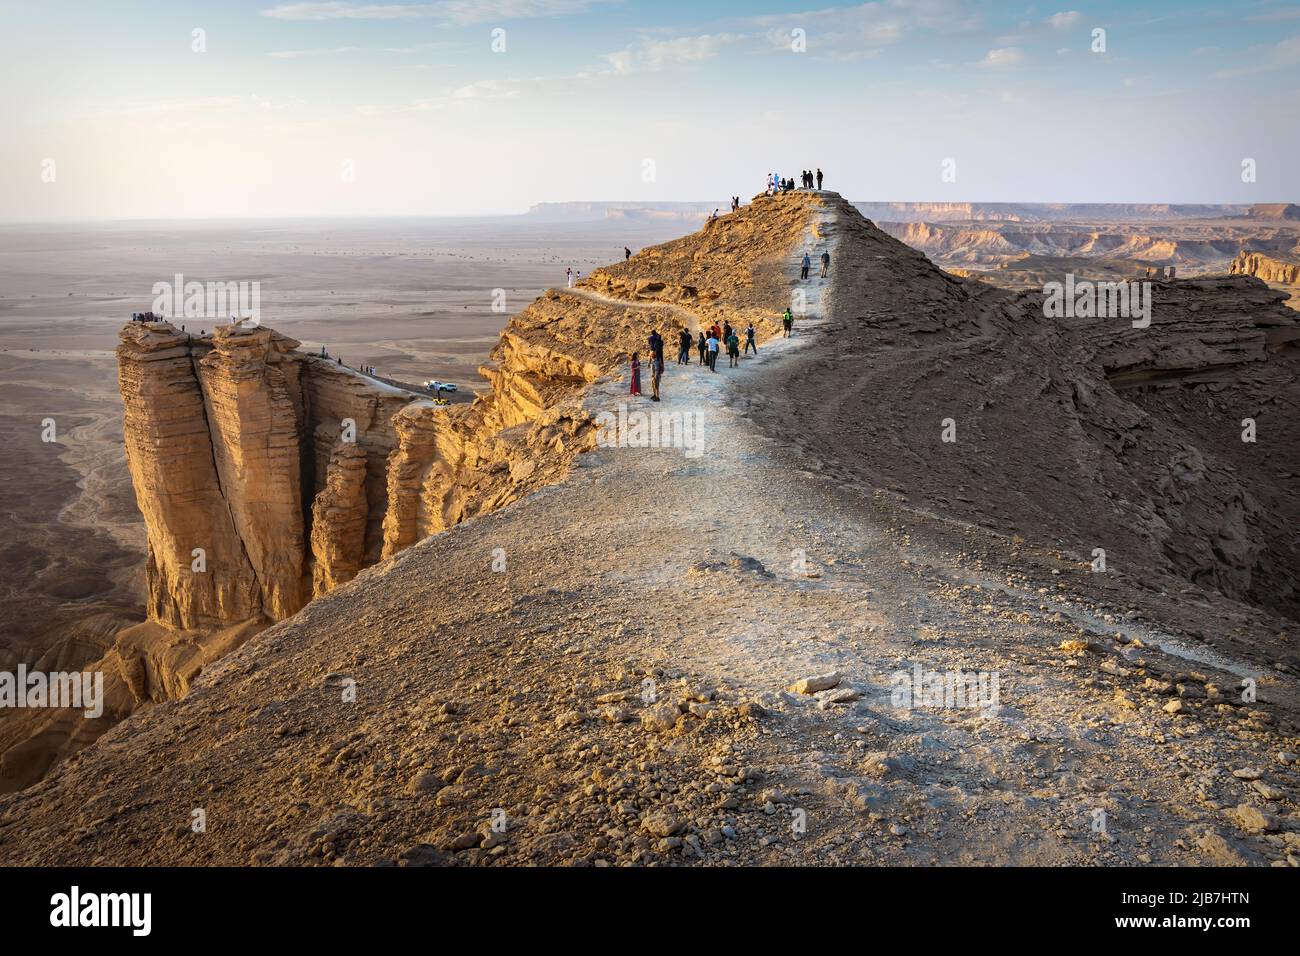 Edge of the World, a natural landmark and popular tourist destination near Riyadh -Saudi Arabia. Stock Photo